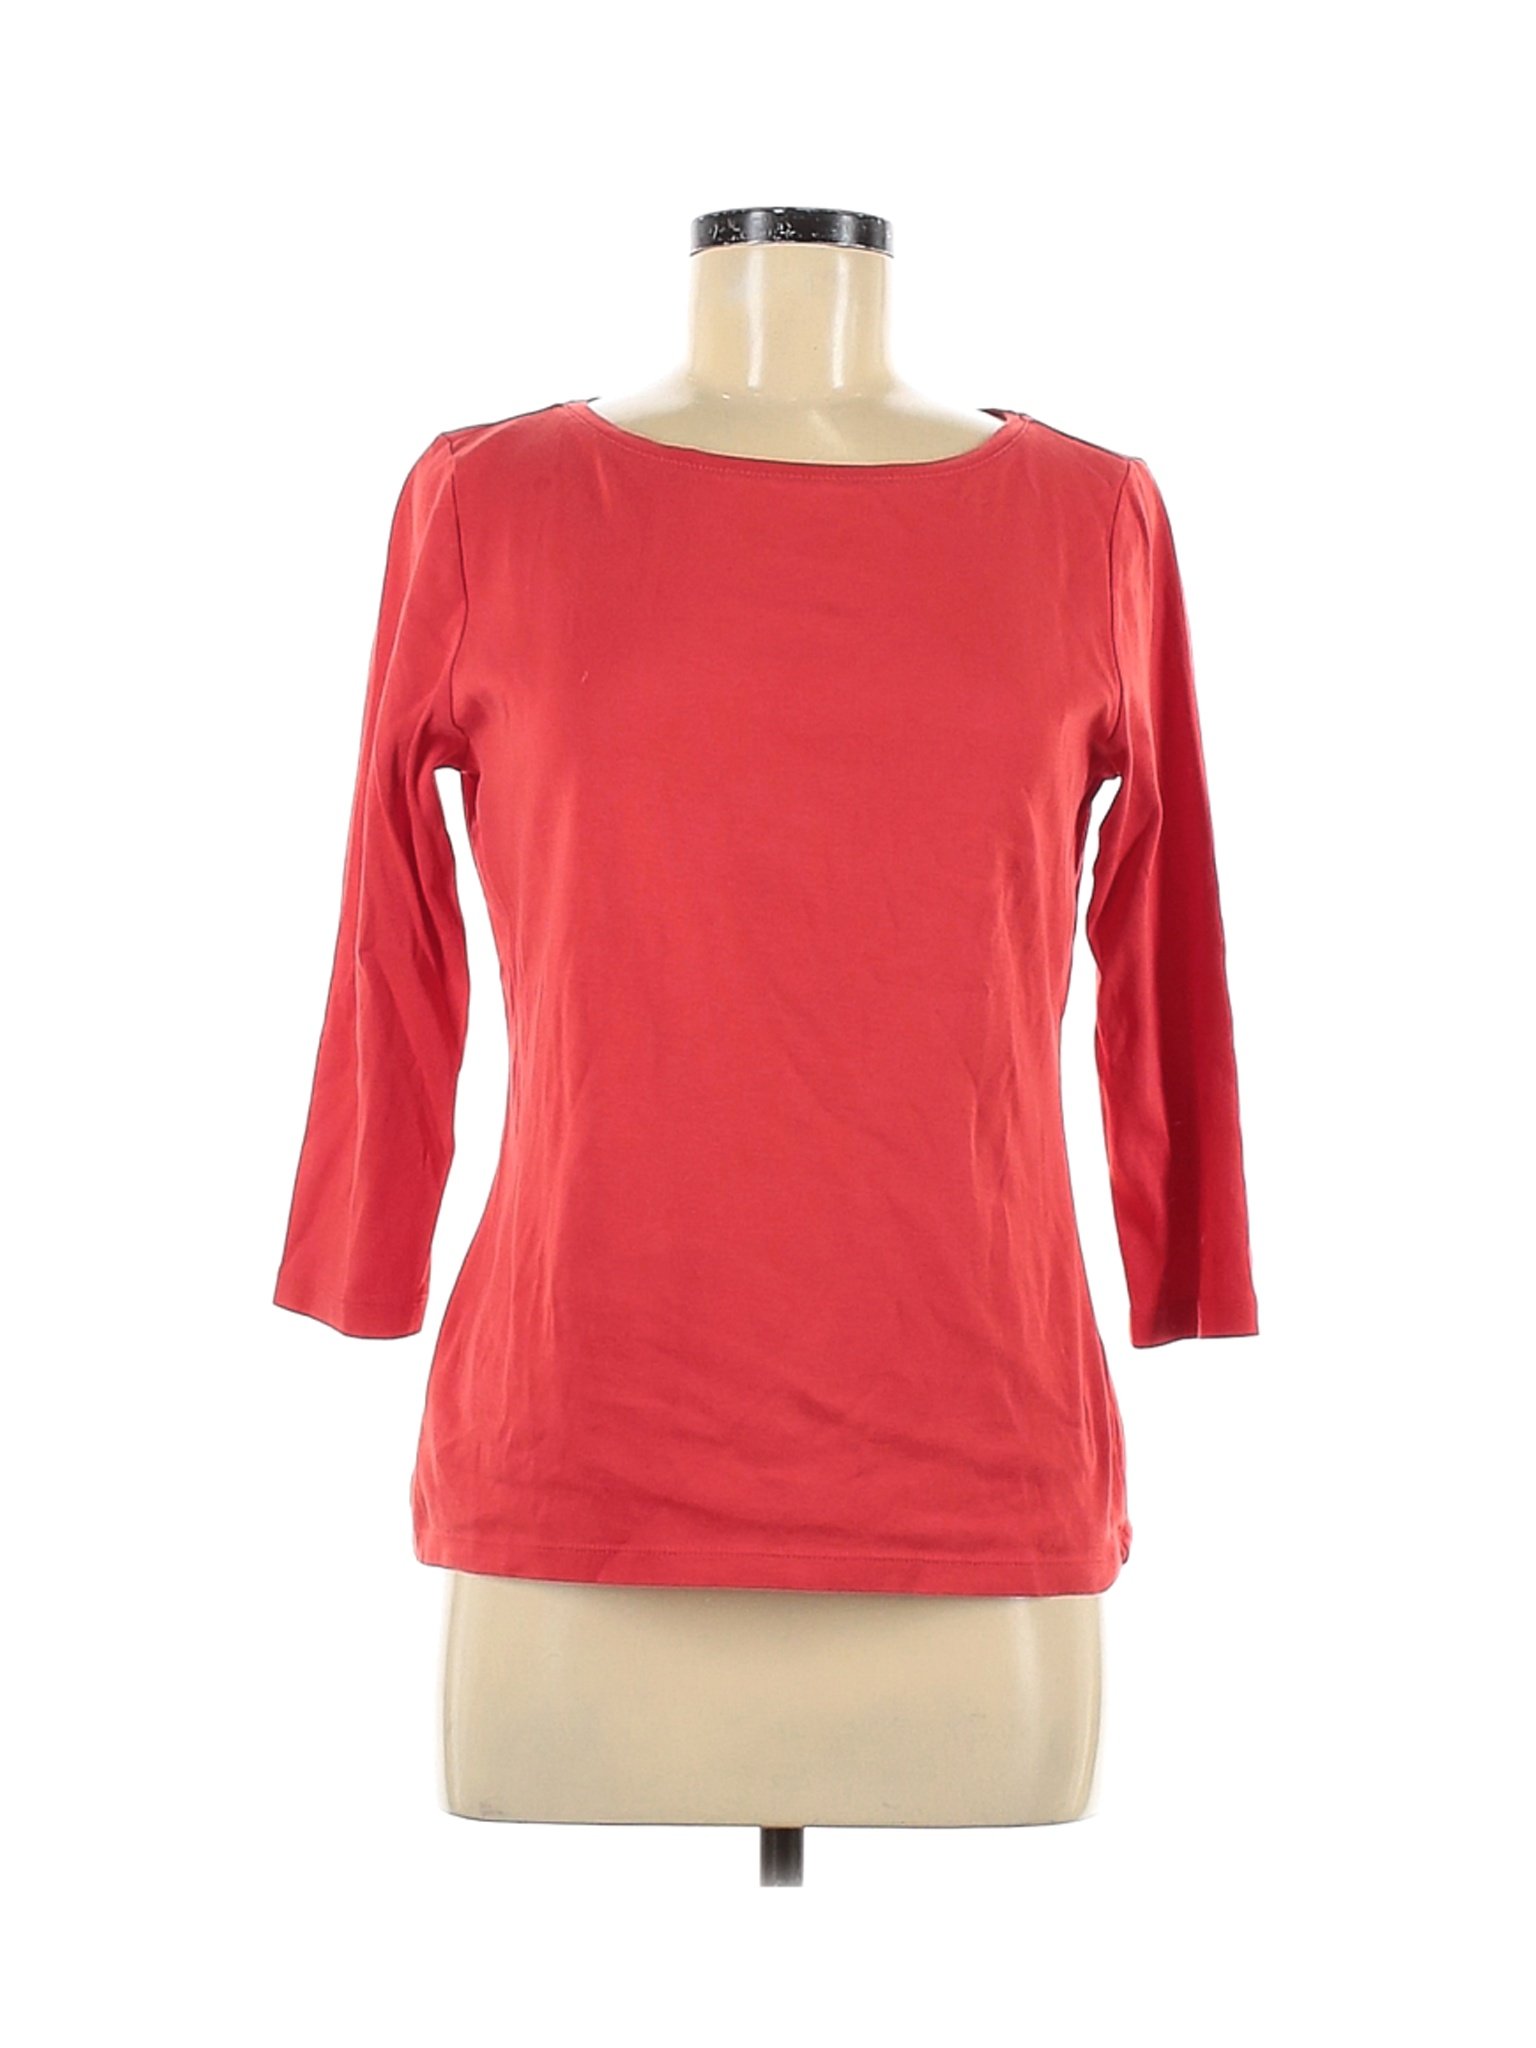 Talbots Women Red 3/4 Sleeve T-Shirt M | eBay